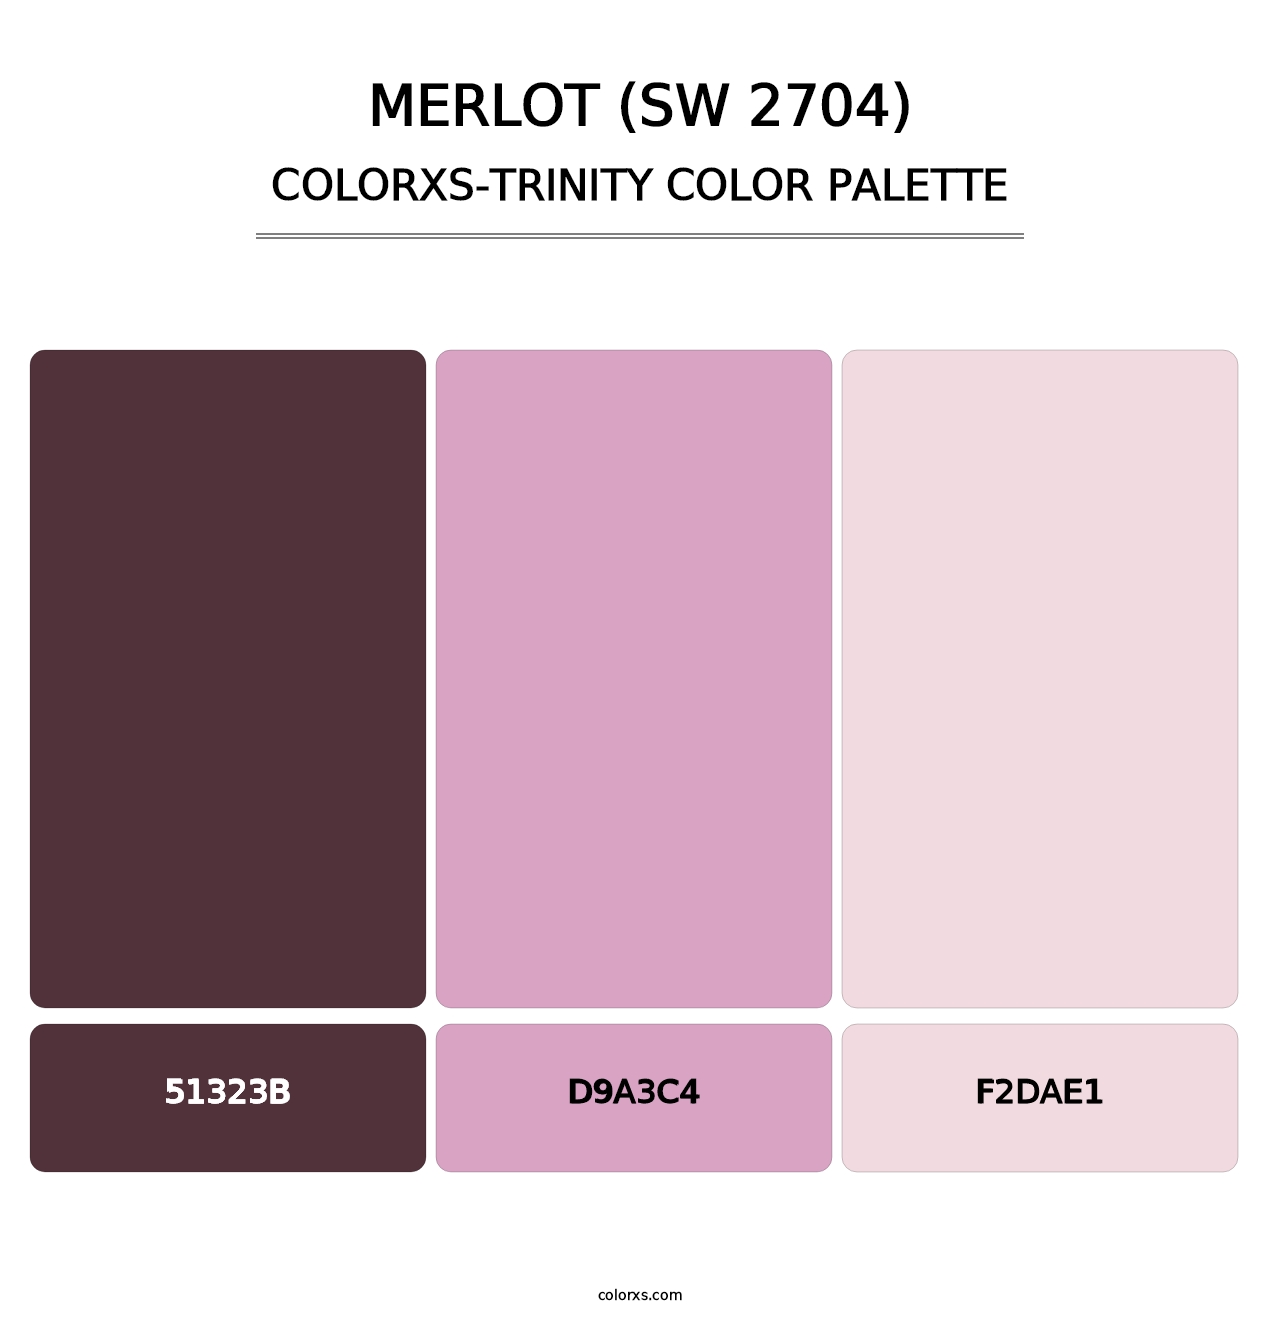 Merlot (SW 2704) - Colorxs Trinity Palette